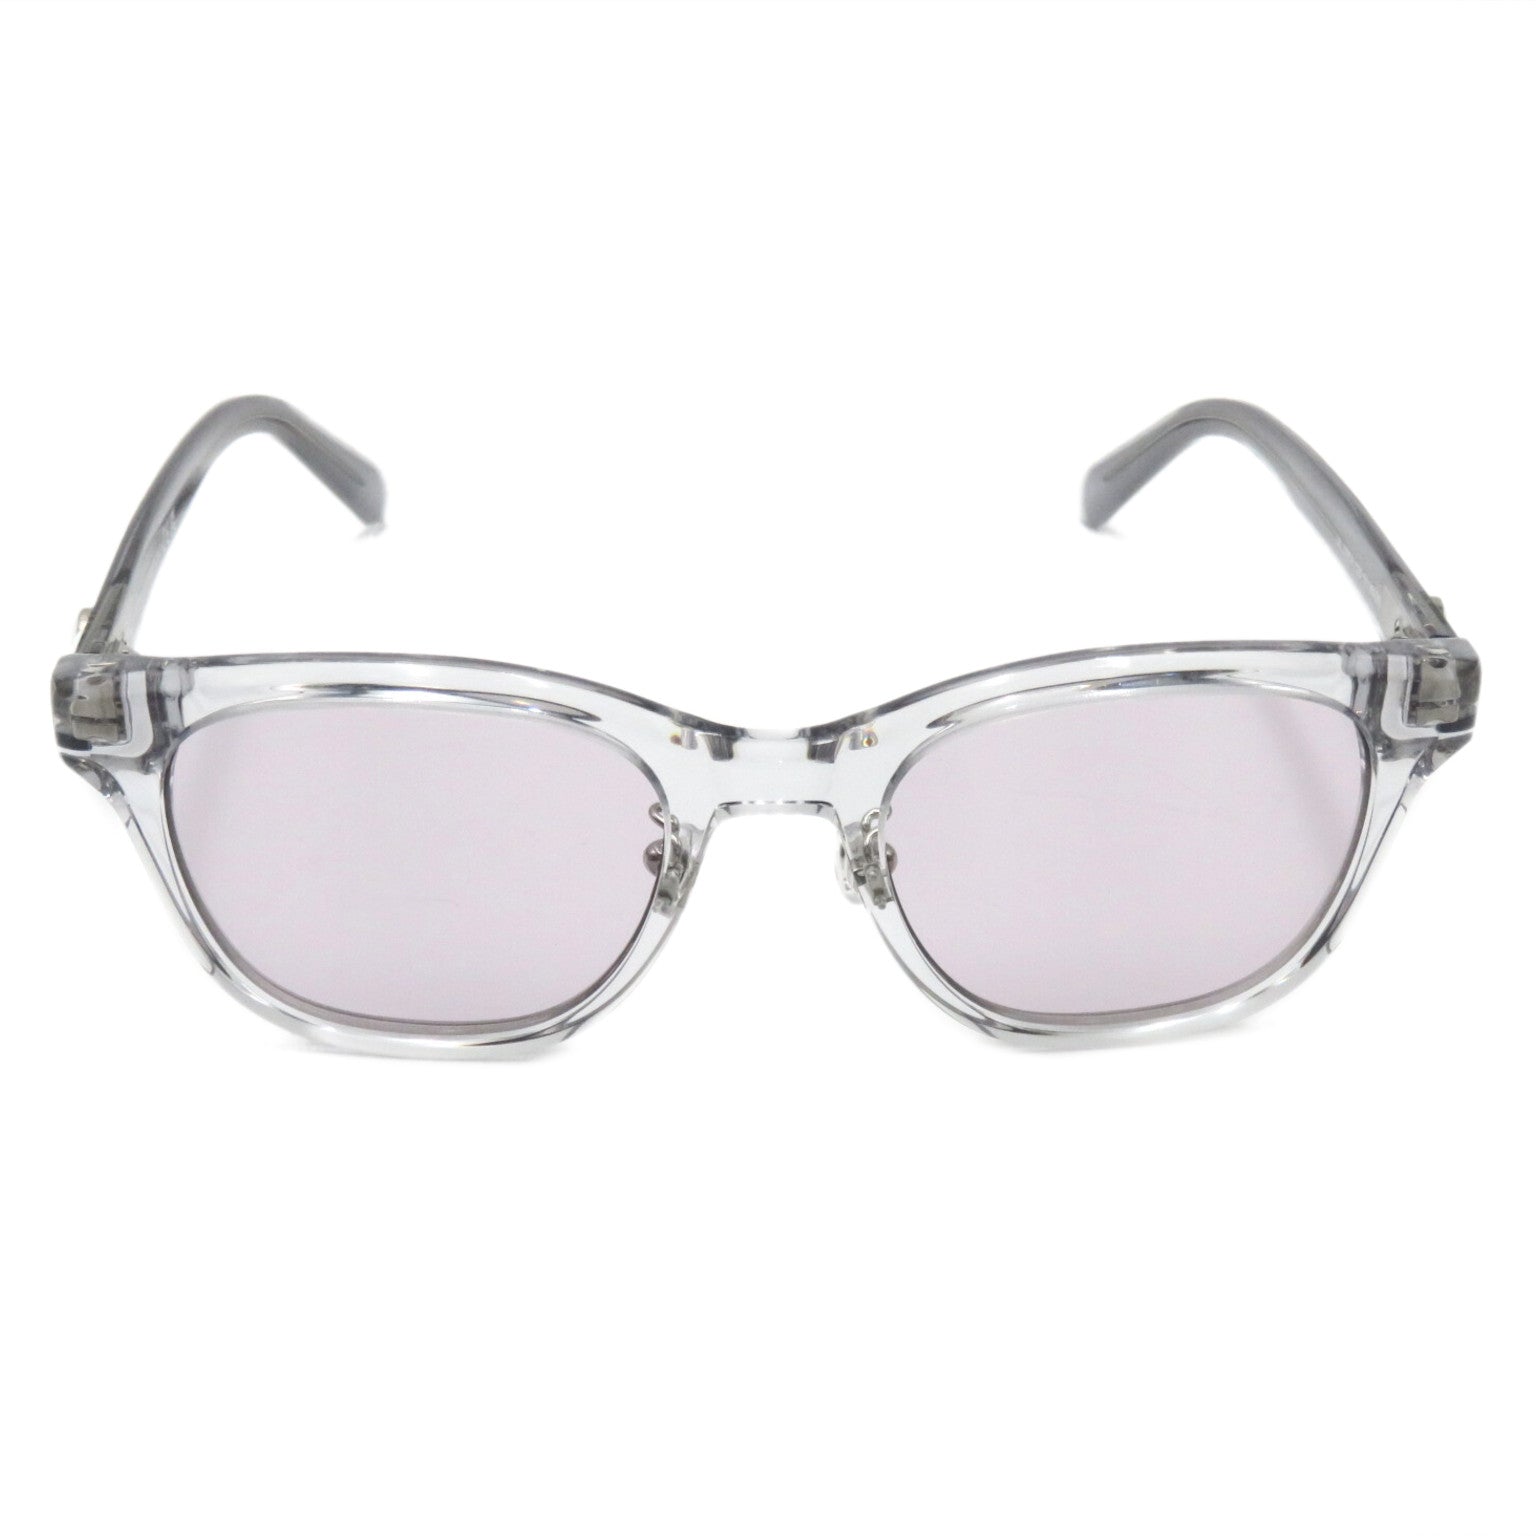 Moncler MONCLER S Glasses    Clear / White / Light Grey Lens 5185D 020(50)